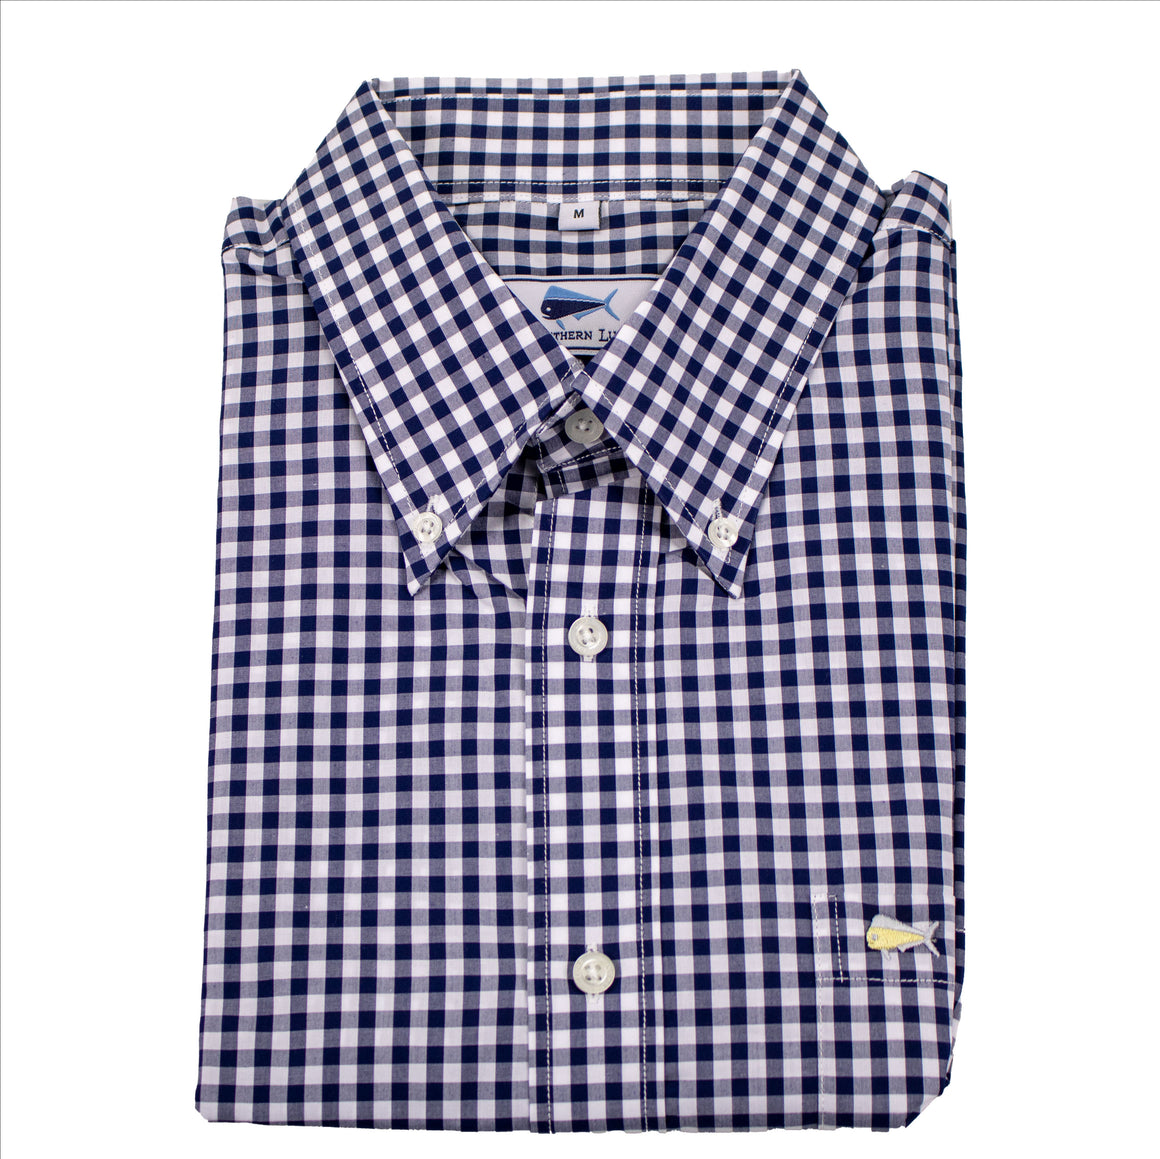 Men's Long Sleeve Sport Shirt - True Navy Blue Gingham